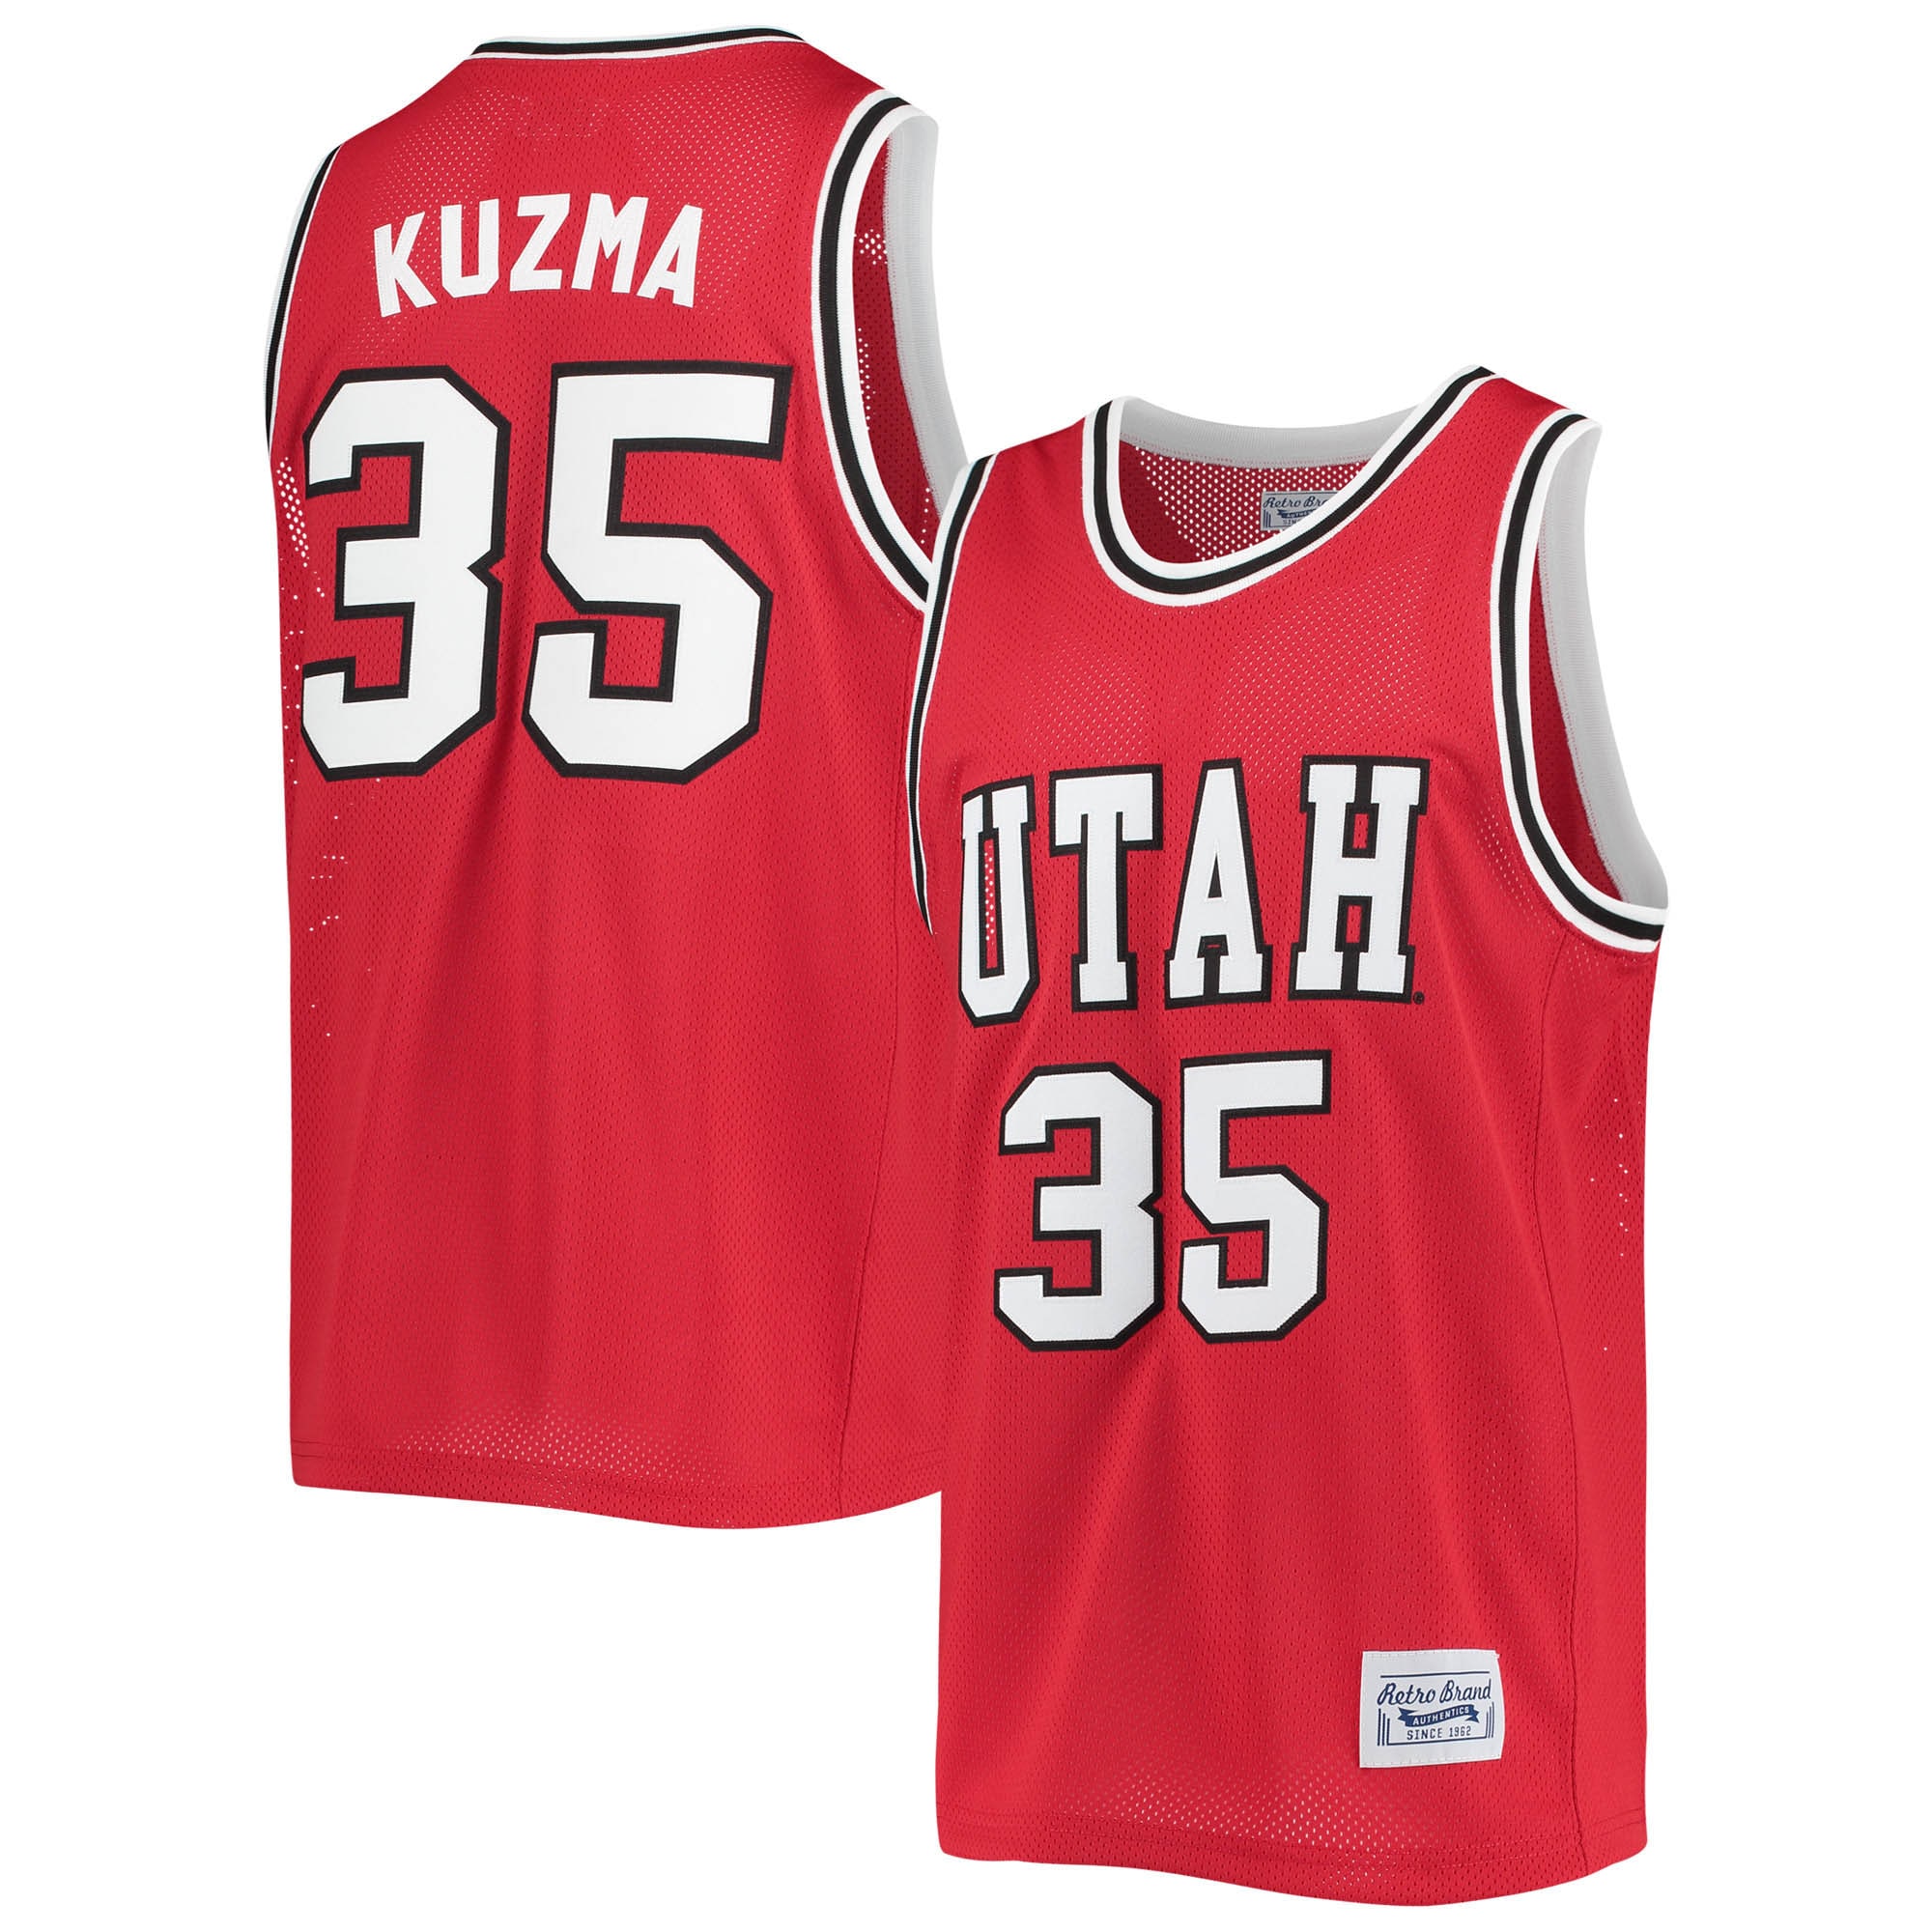 Kyle Kuzma Utah Utes Original Retro Brand Commemorative Classic Basketball Jersey - Red For Youth Women Men